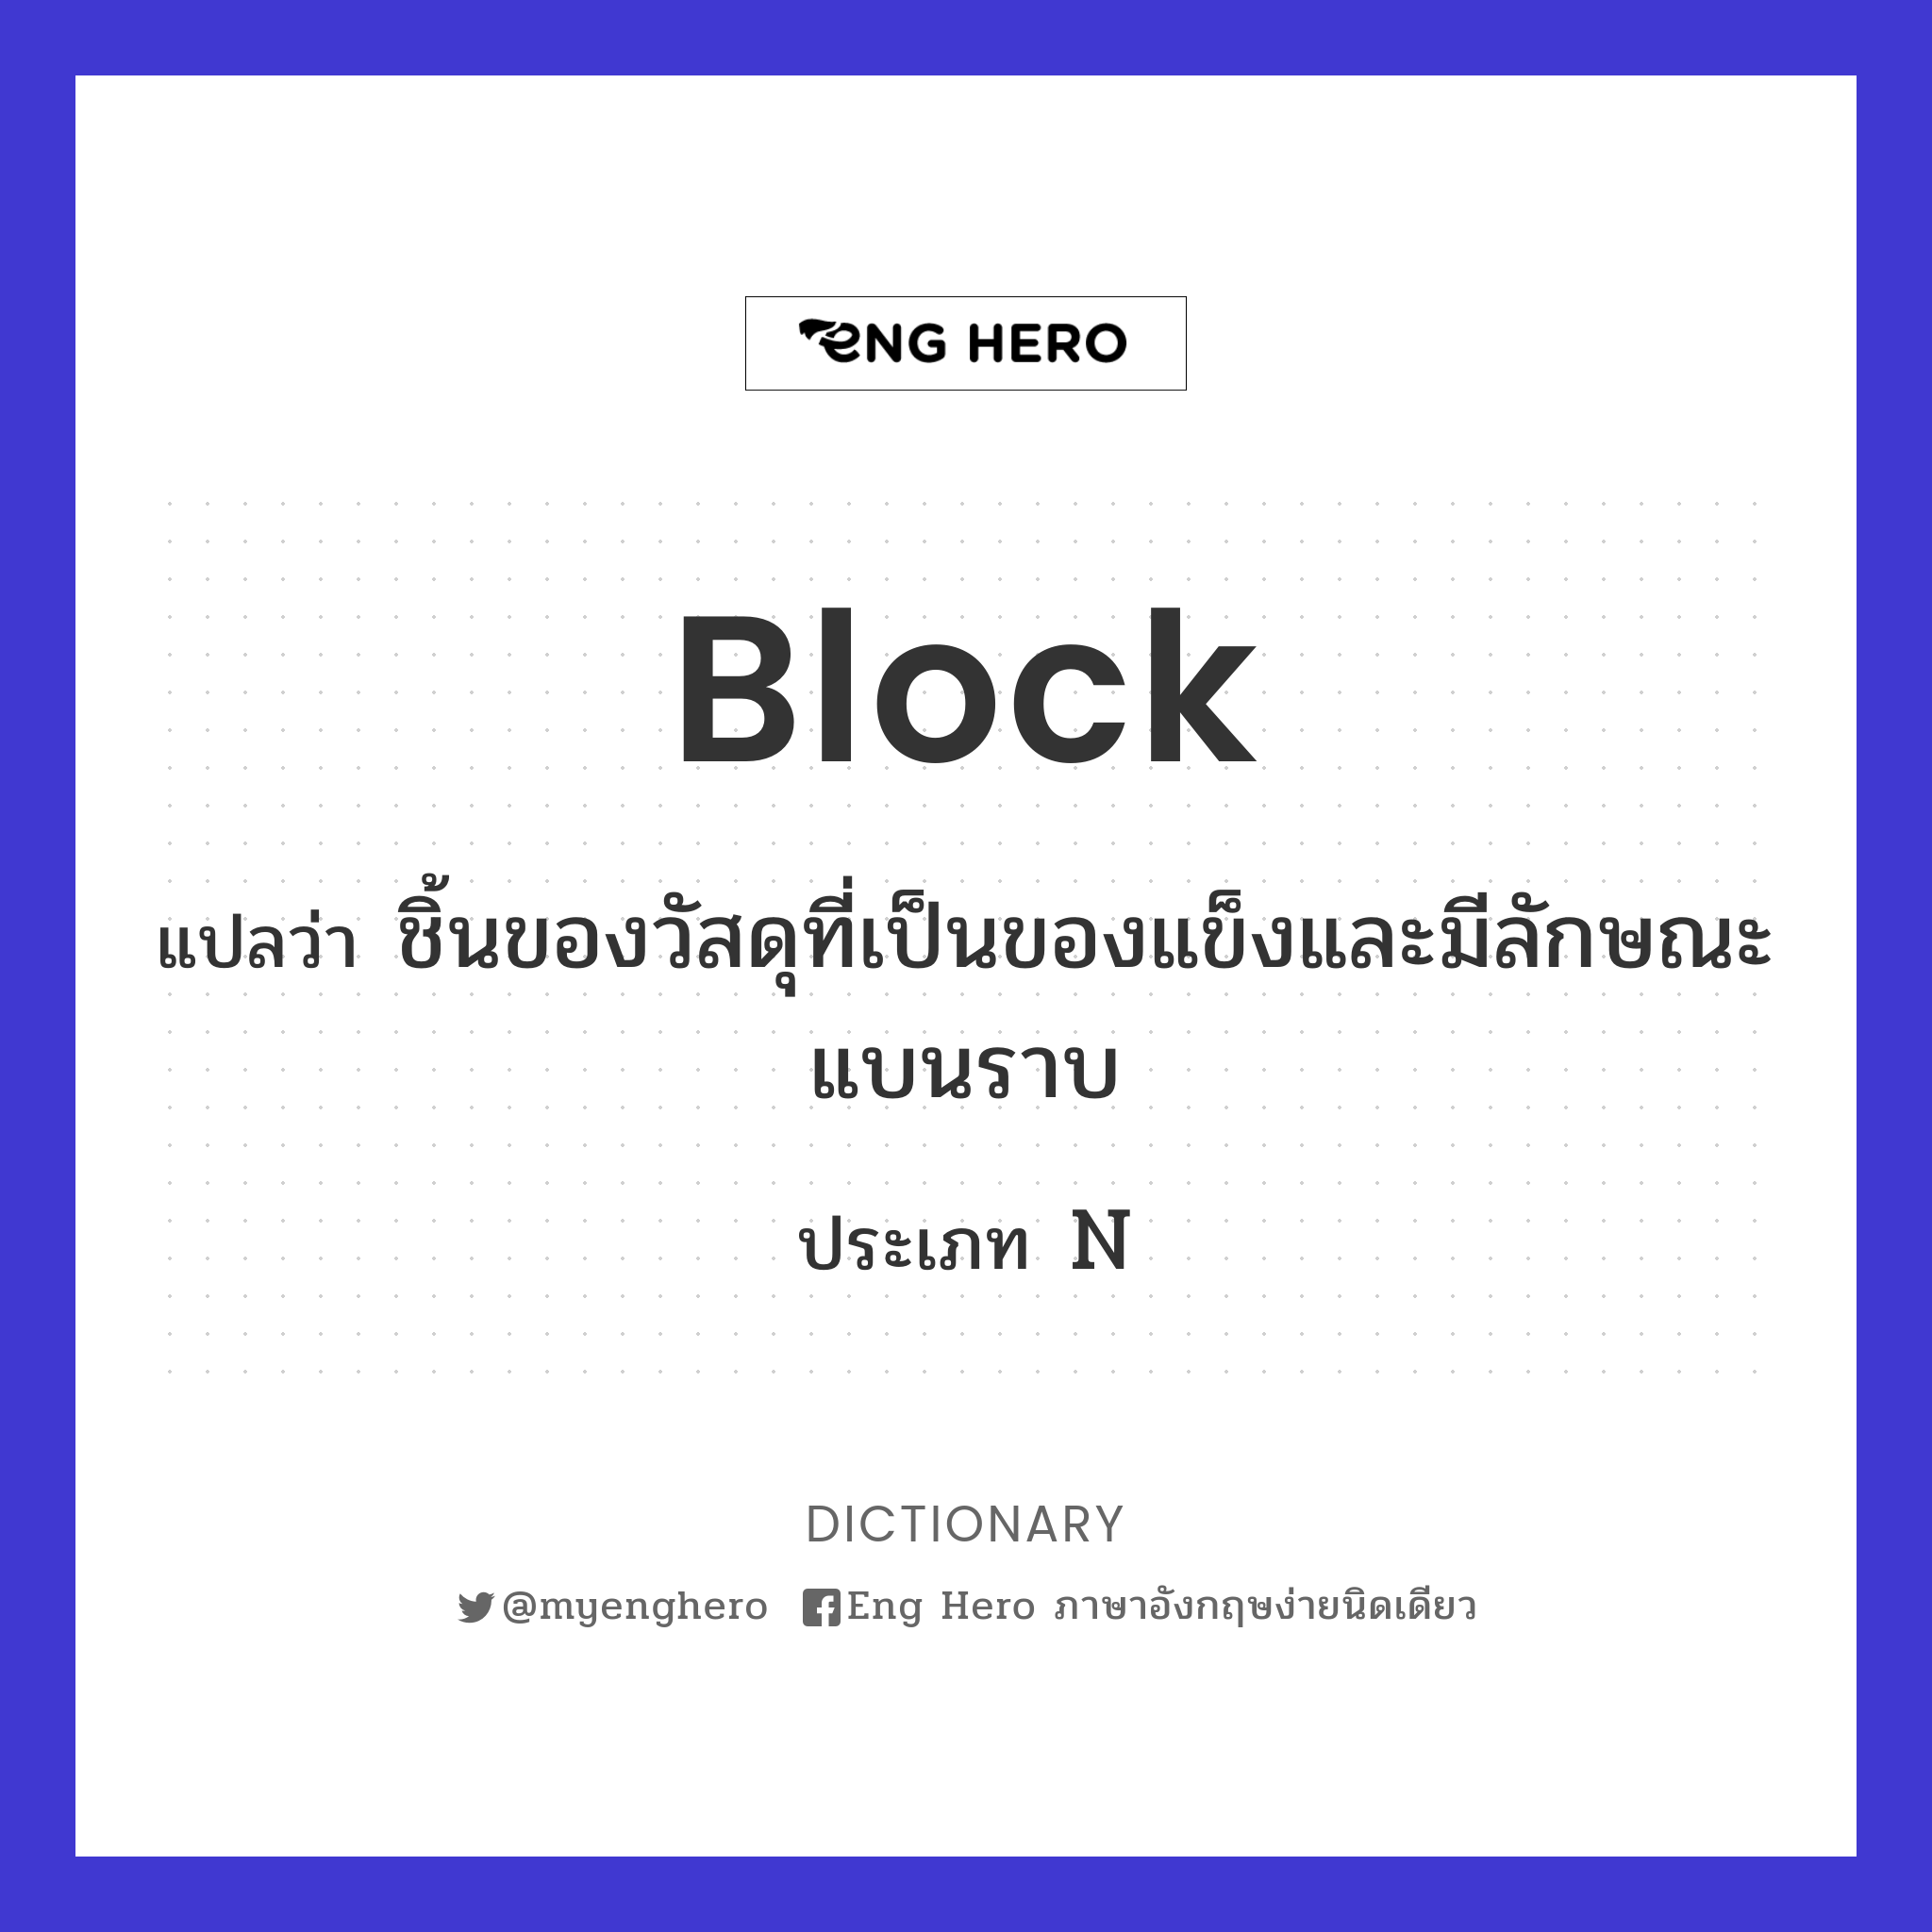 block